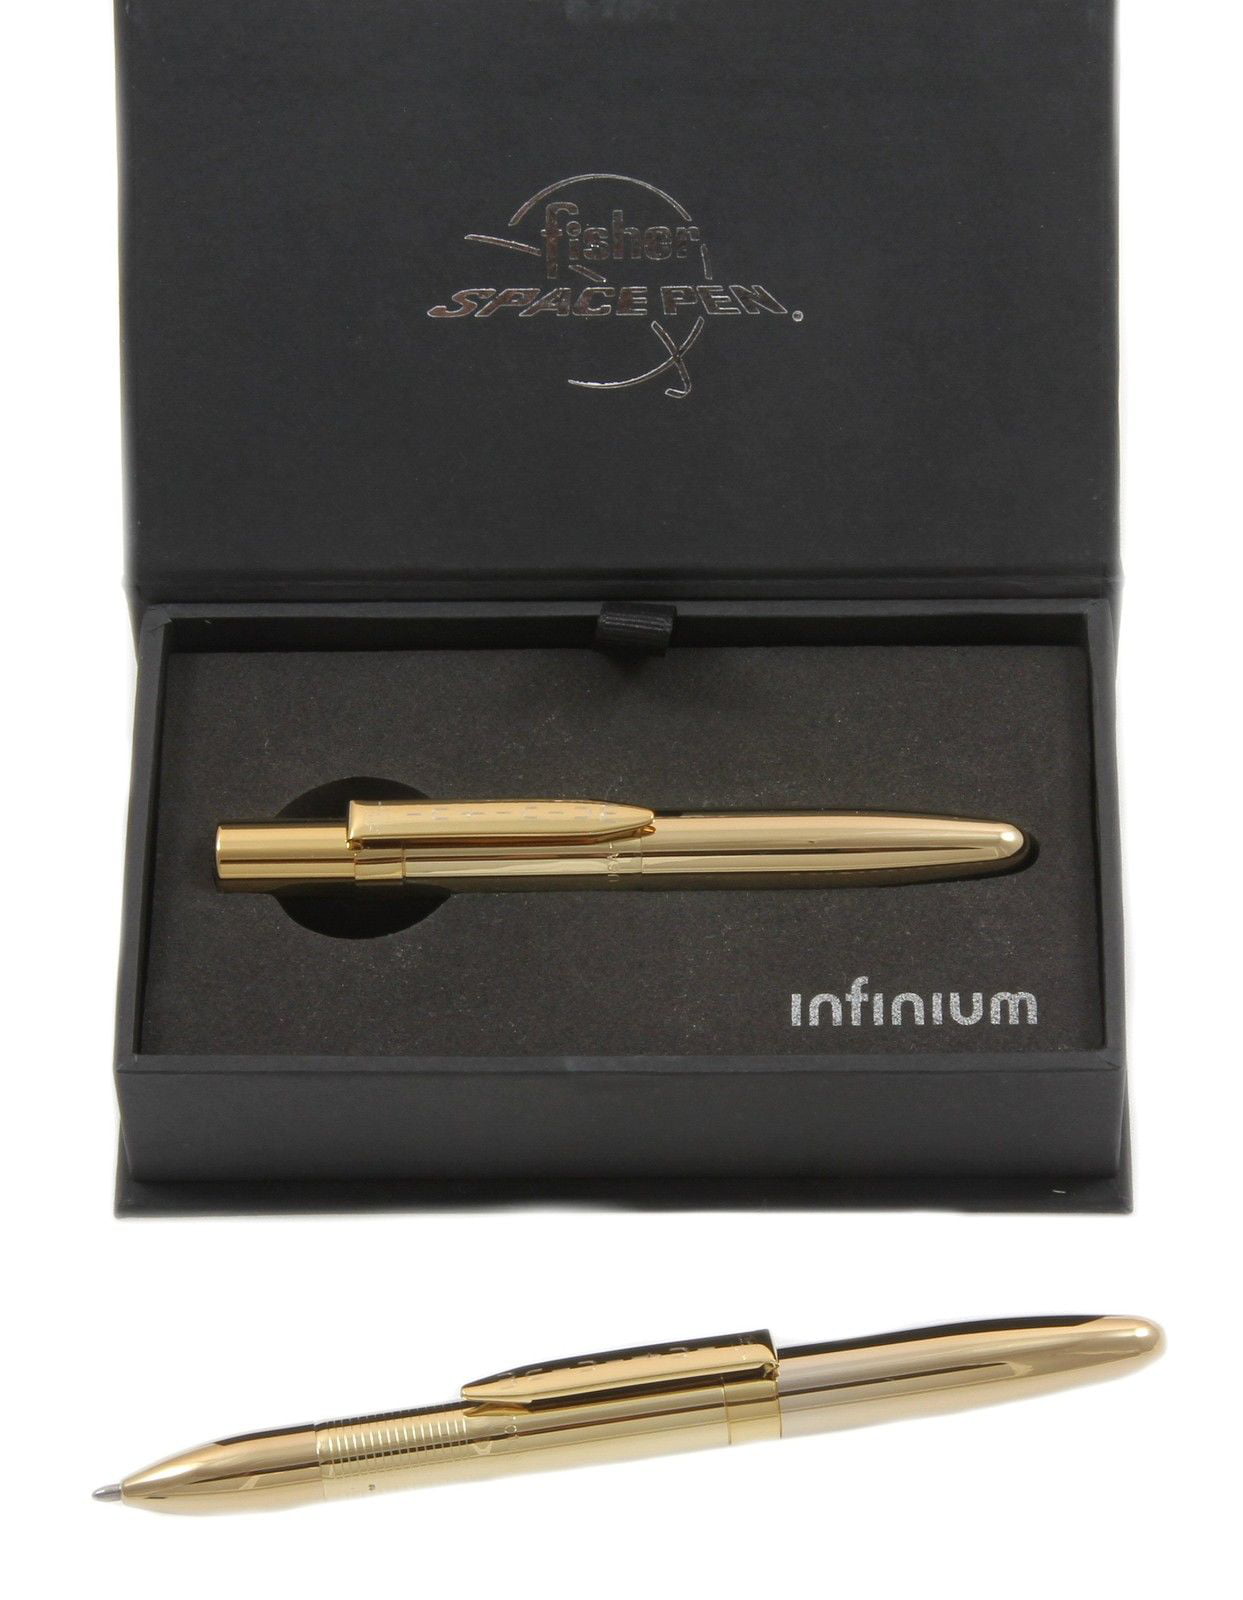 Fisher Space Pen Infinium Gold Titanium Nitride Body BlueInk